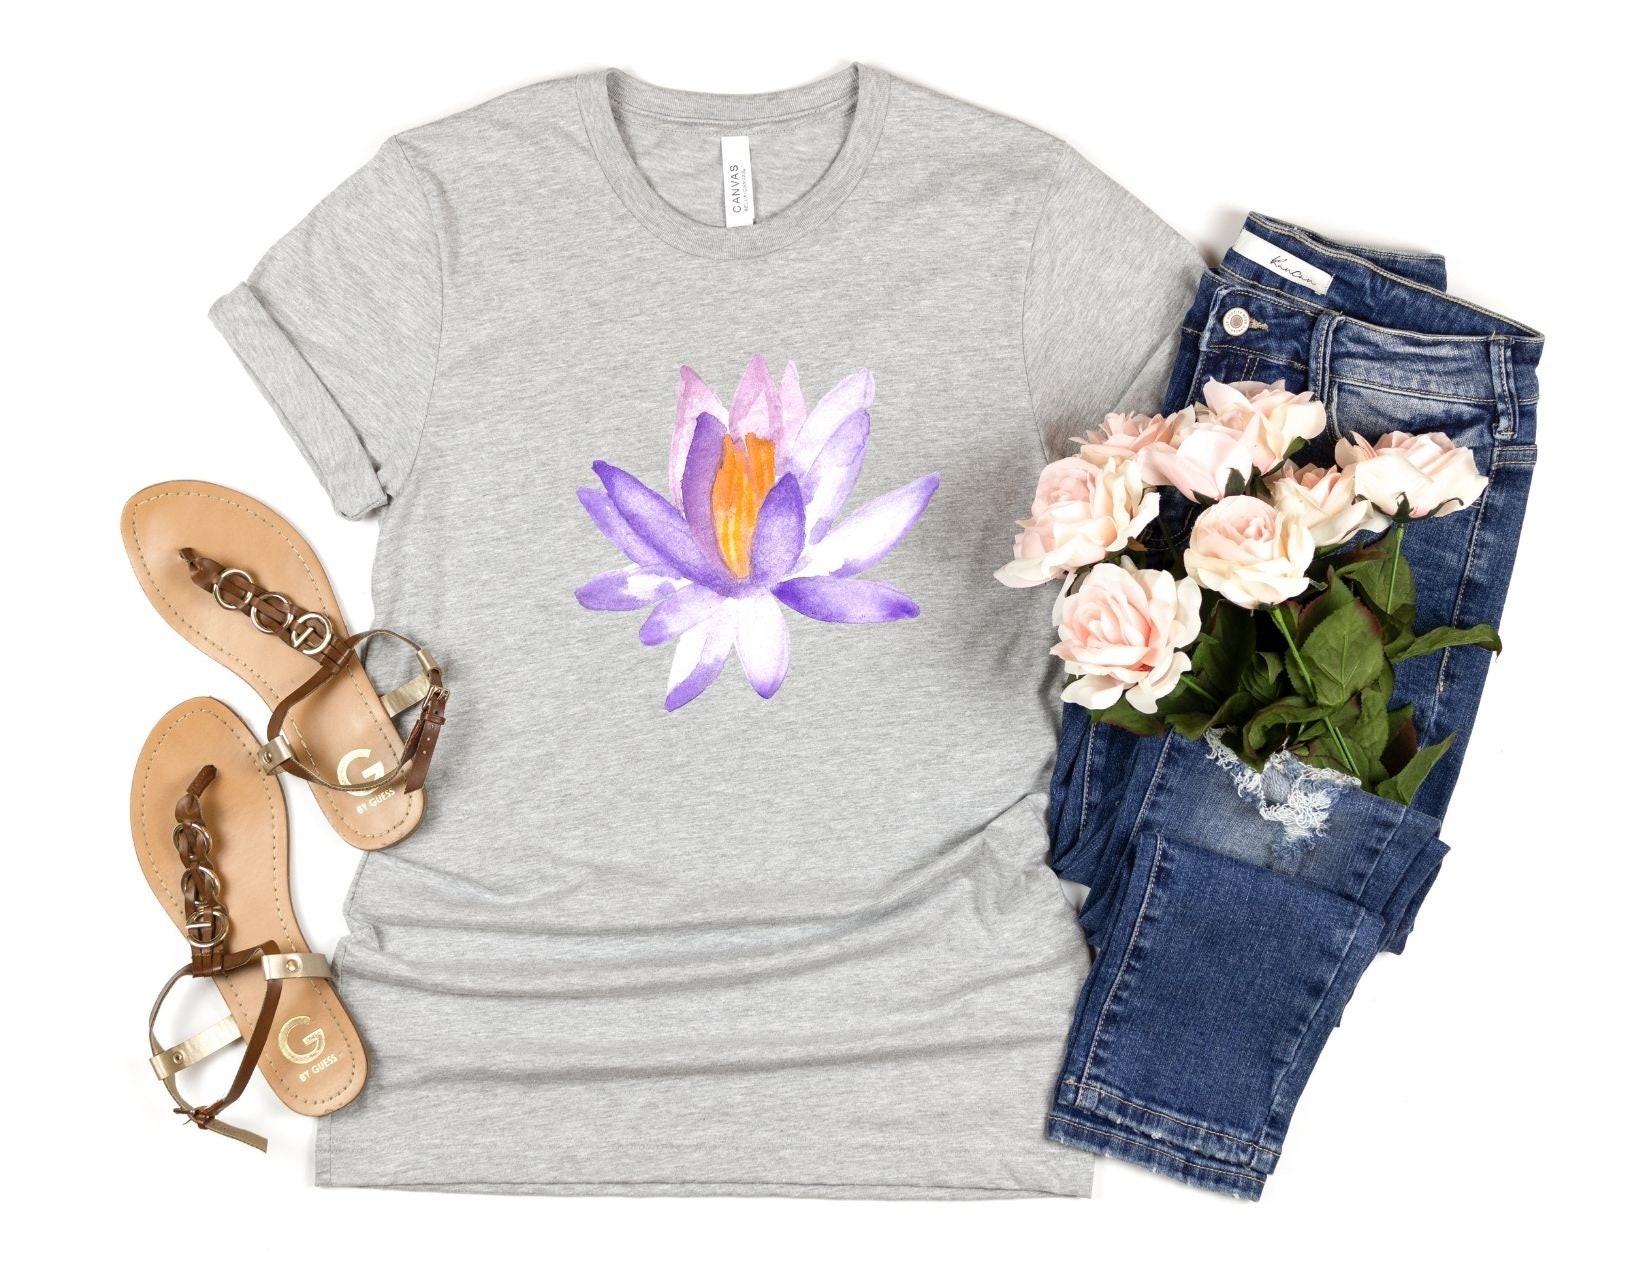 Lotus Flower Shirt Yoga Shirt Summer Shirt Graphic Tee | Etsy